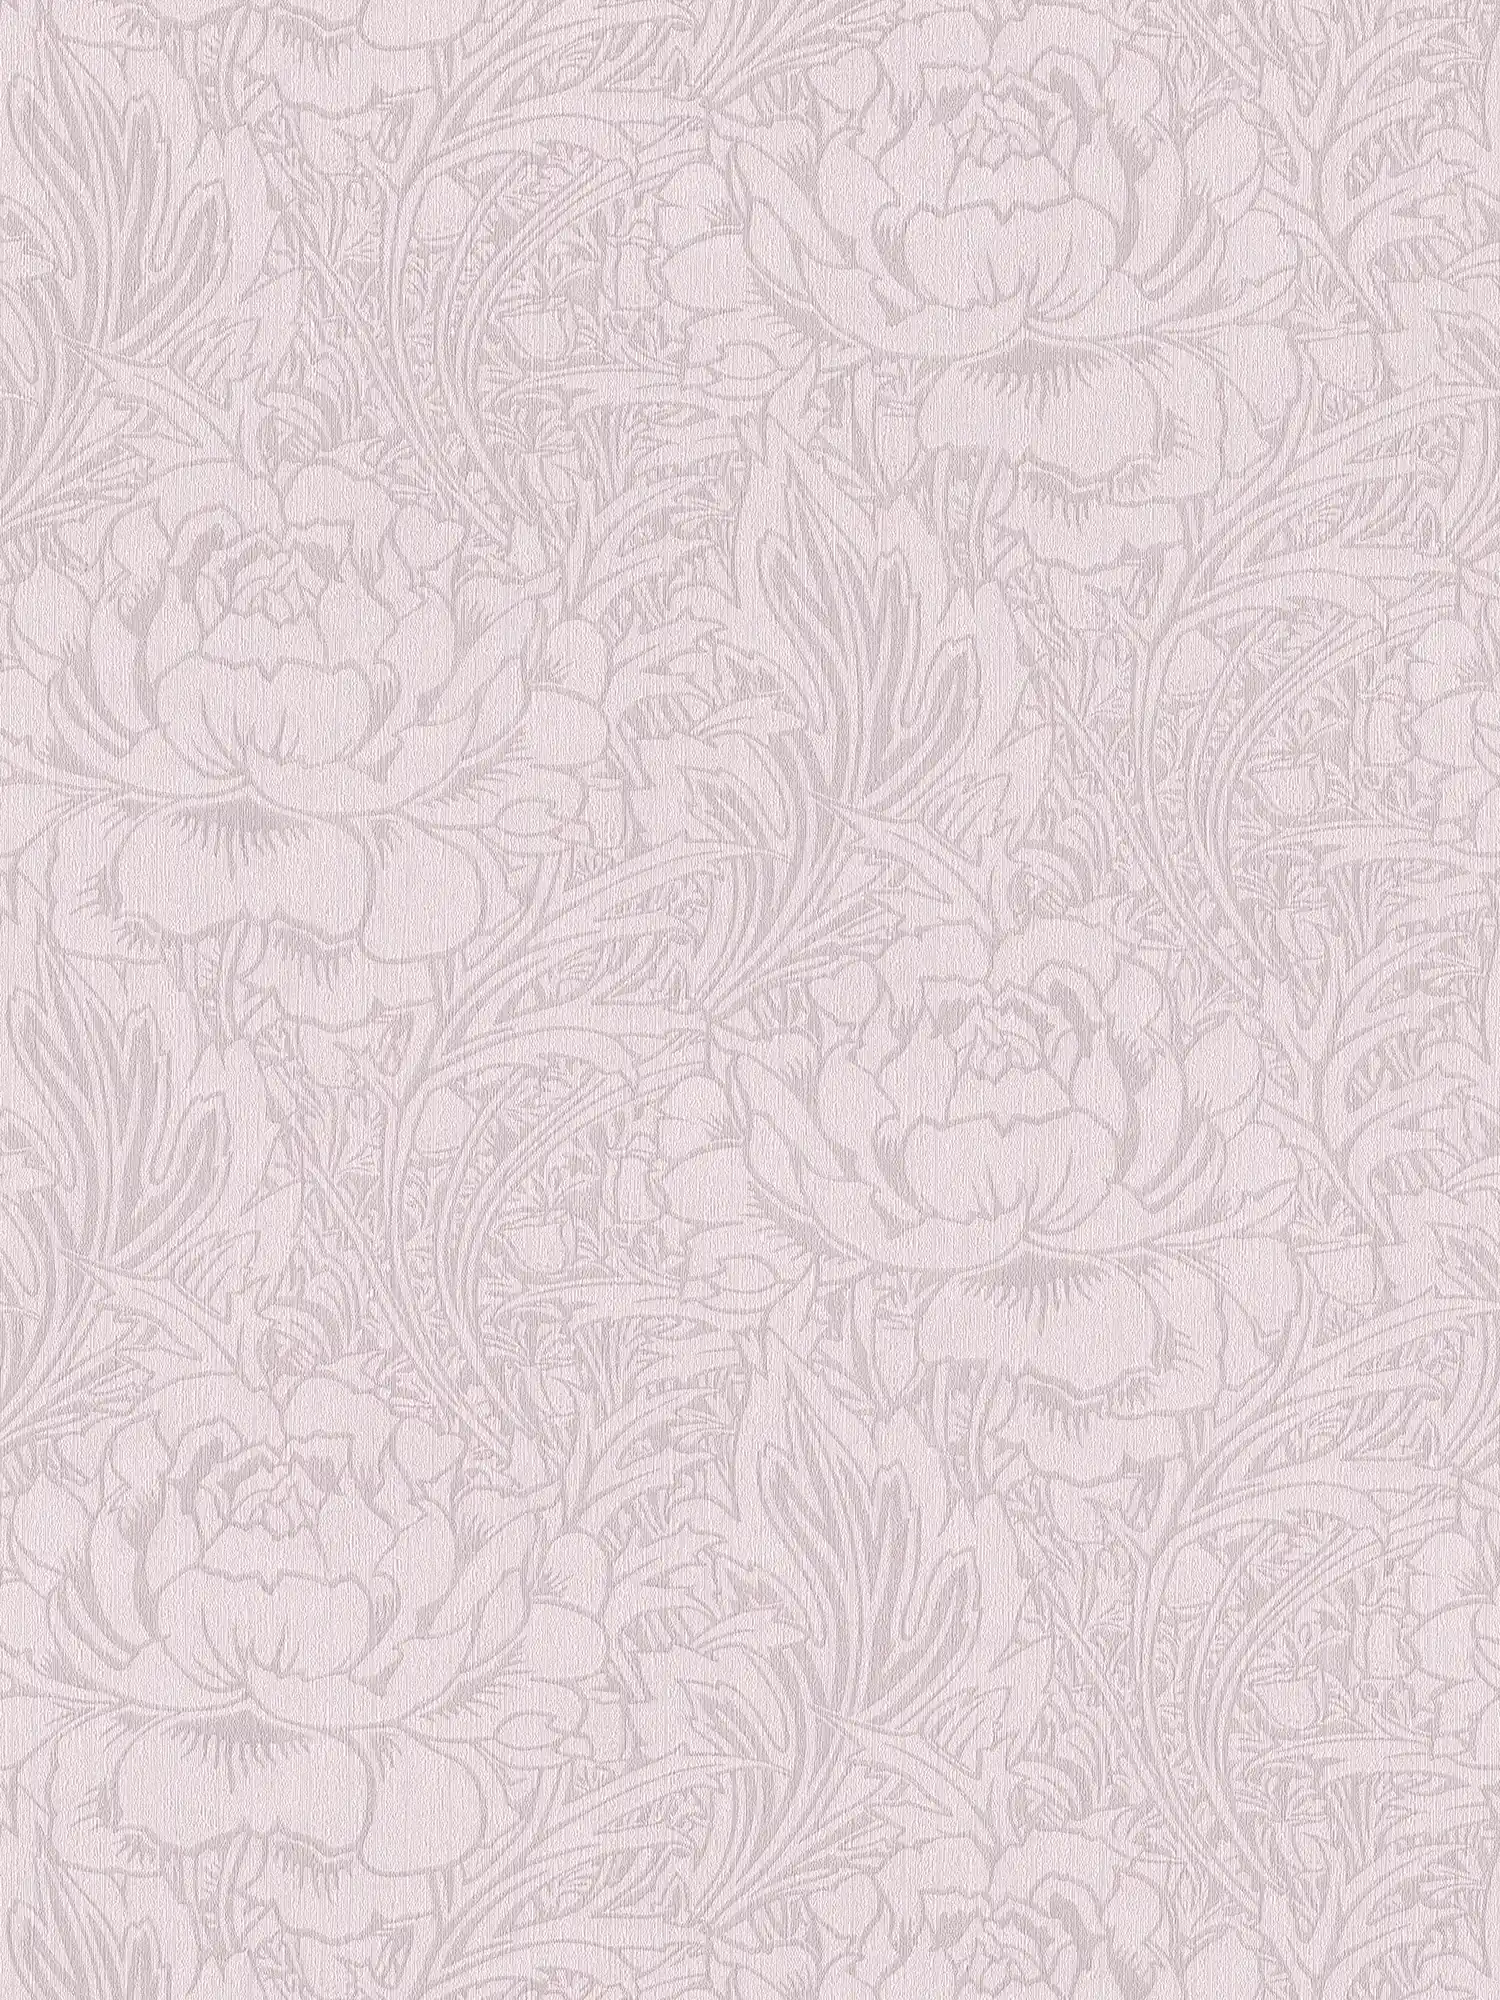 Papel pintado floral con motivos art nouveau, liso y mate
